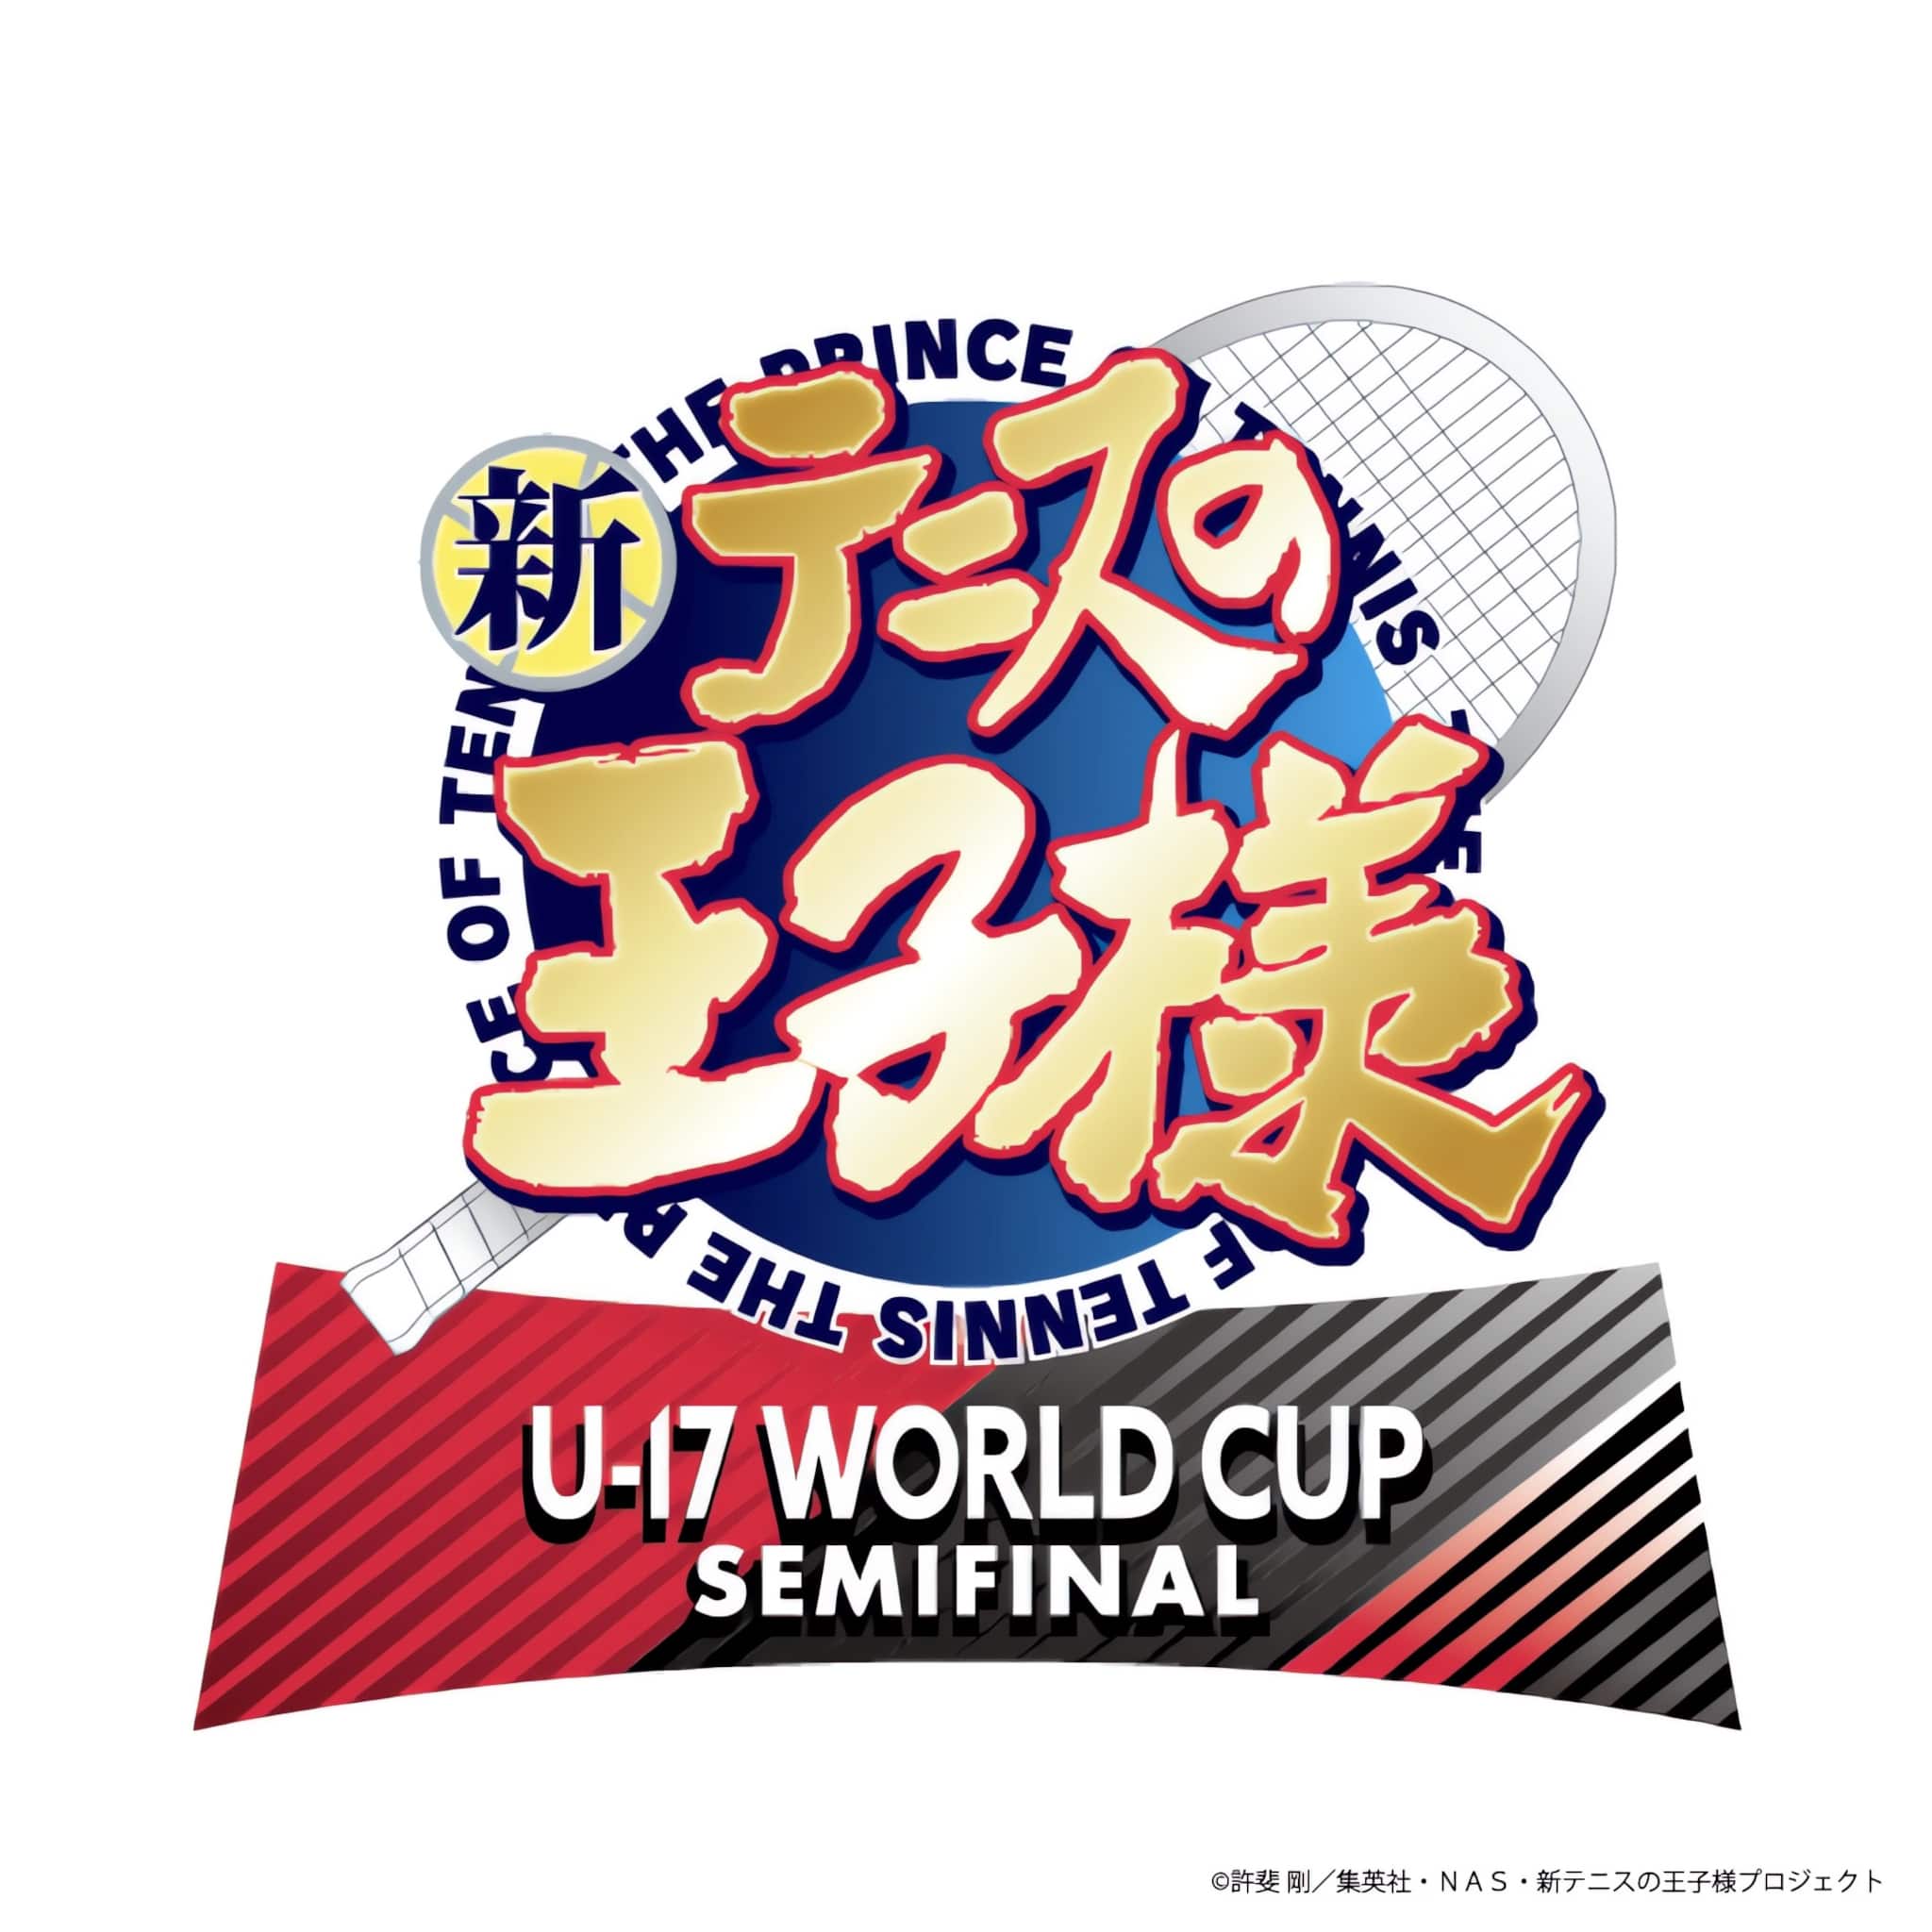 Logo de lanime The Prince of Tennis II : U-17 World Cup - Semifinal